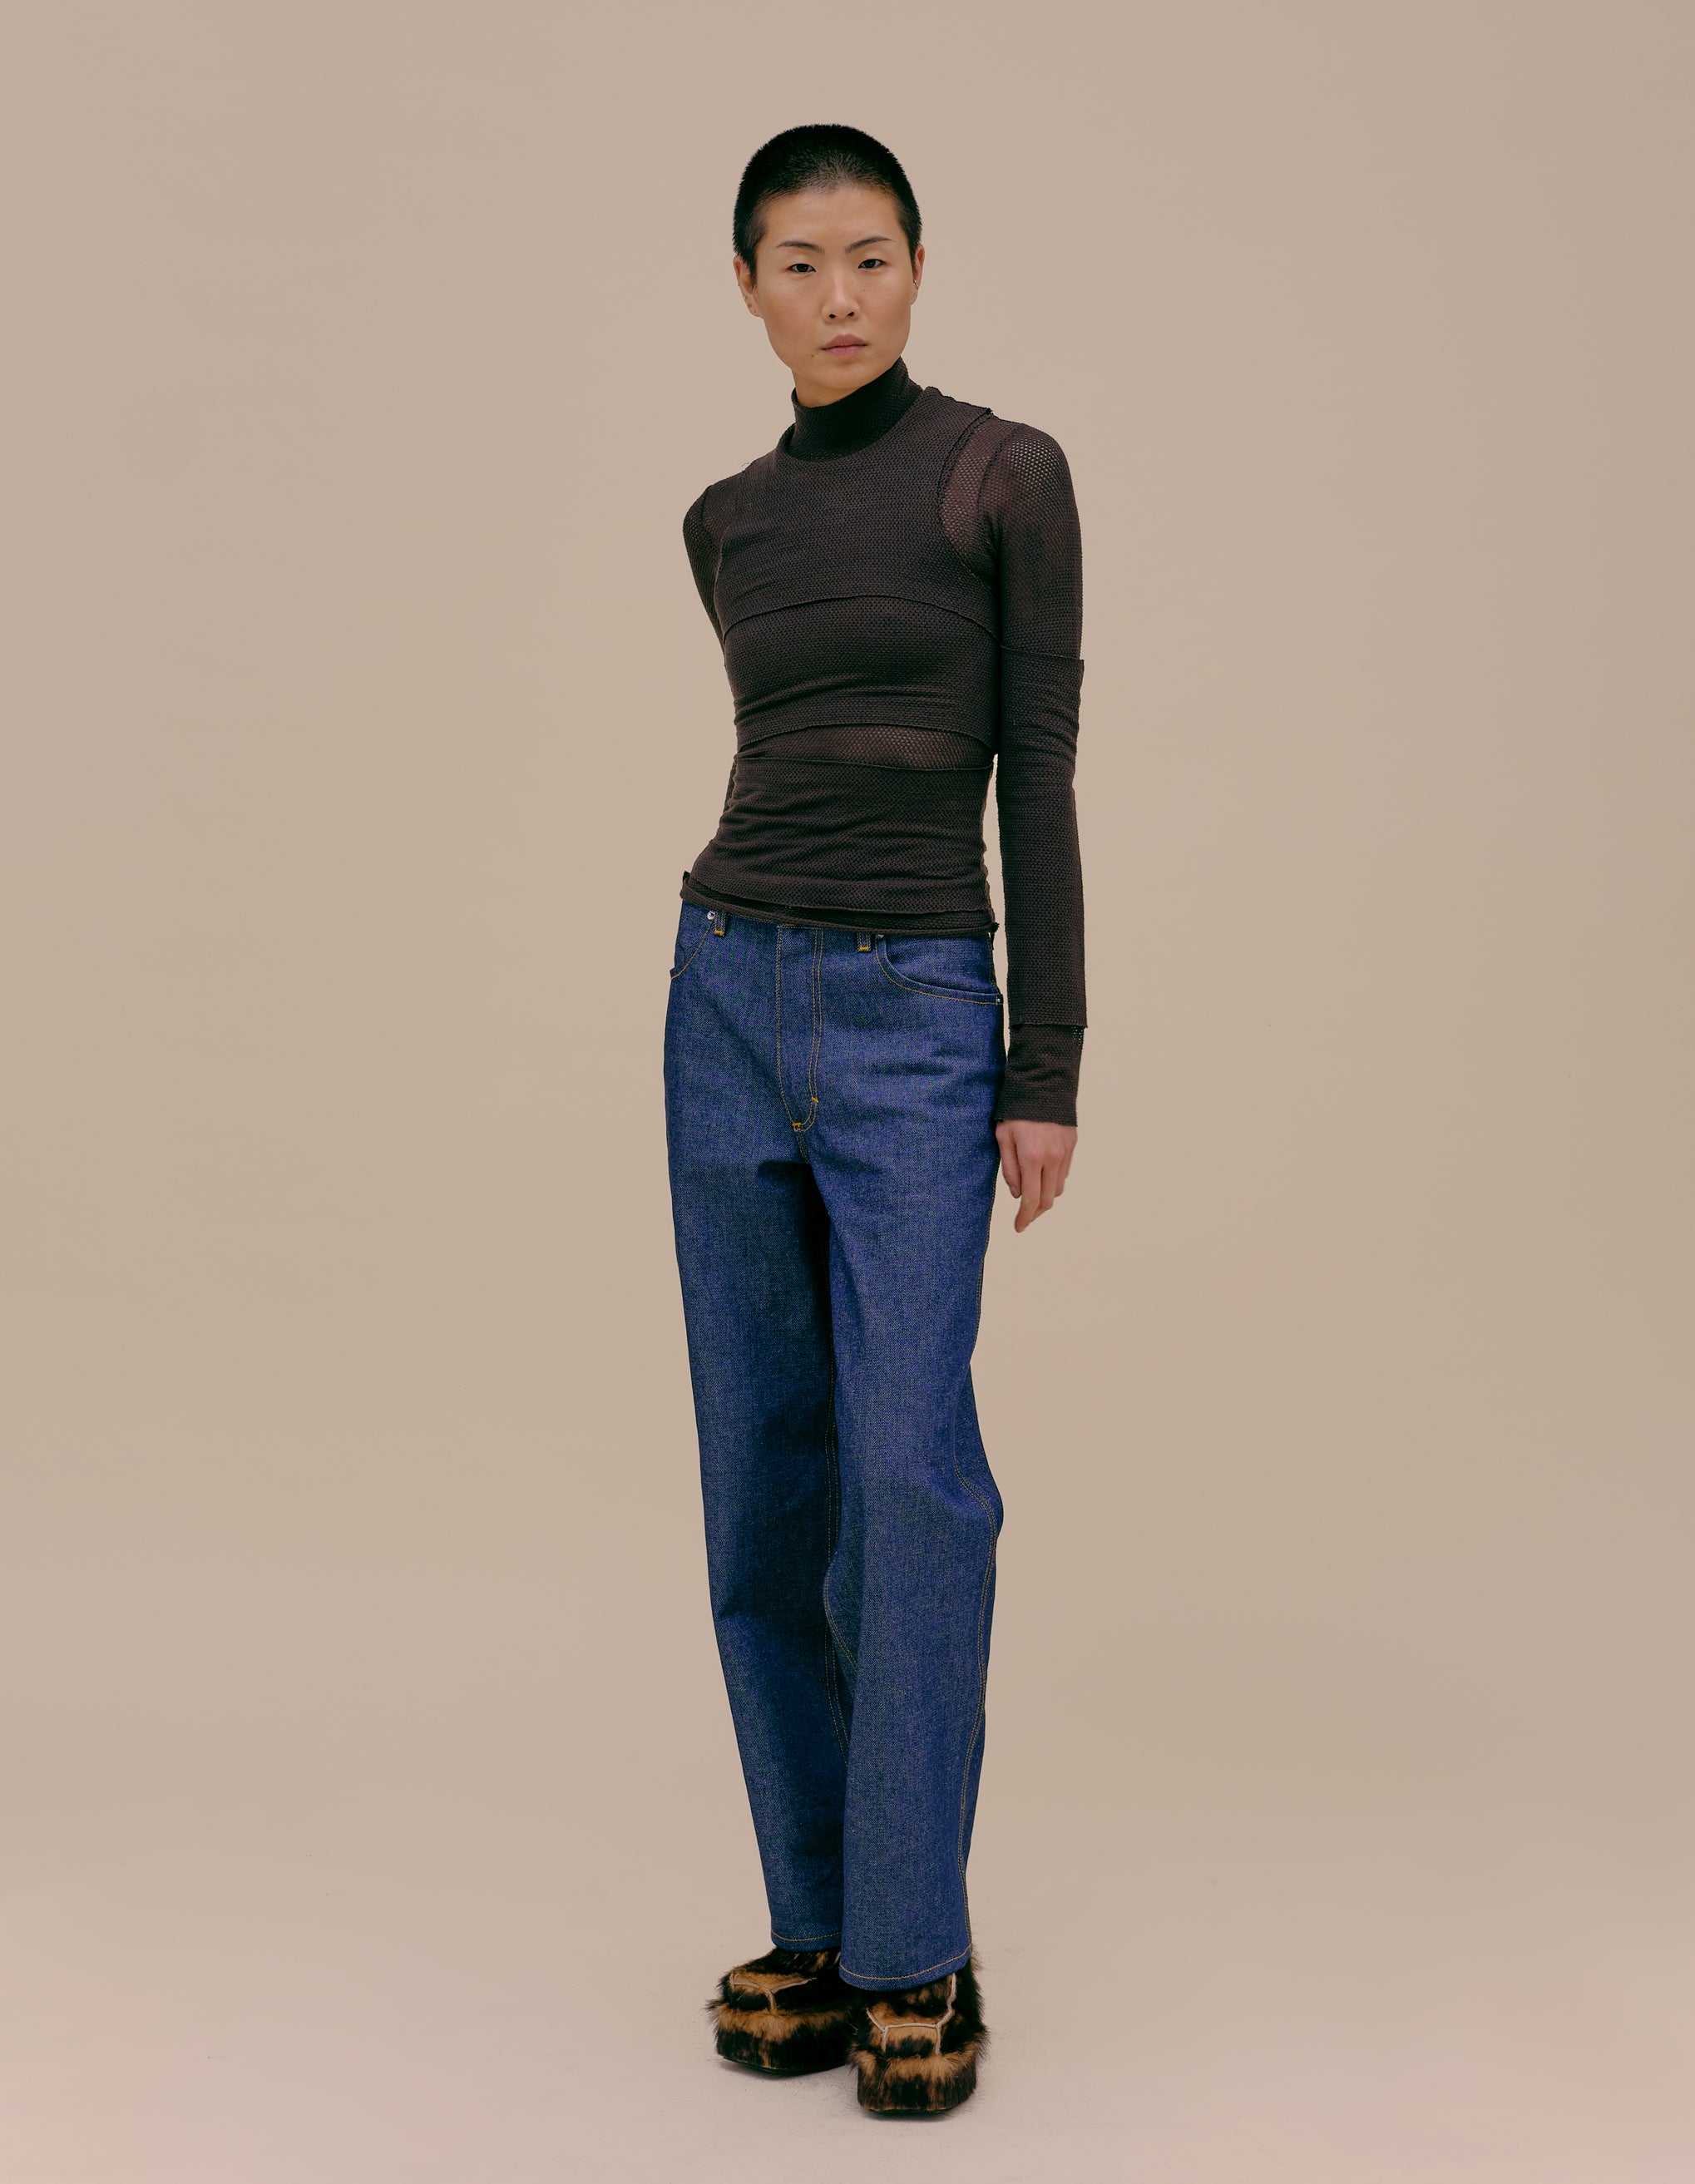 Pantalon extra large blue-jean : Denim Lengha Pants [wP0504] - Clothing and  accessories